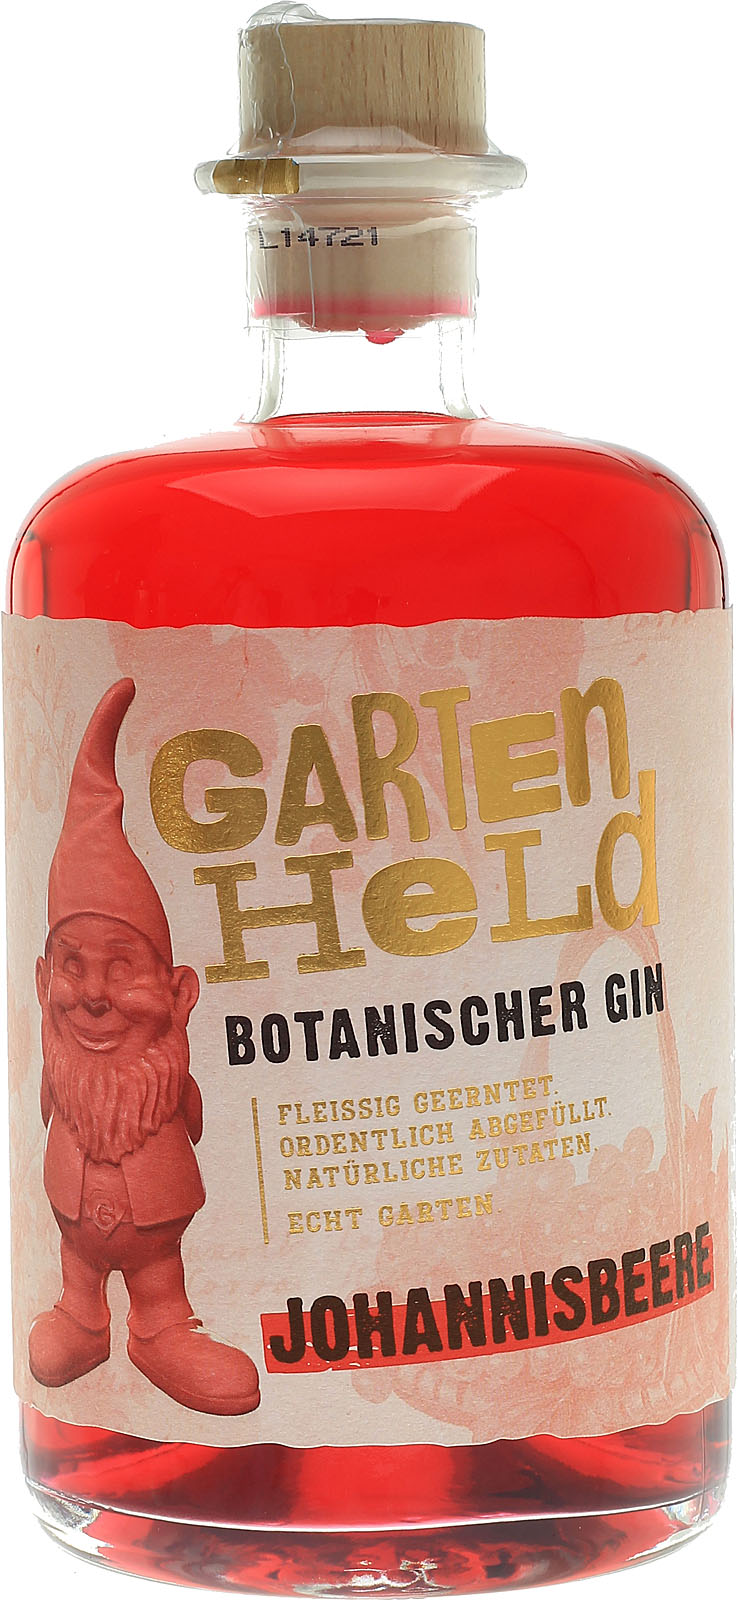 Gartenheld Botanischer Gin Johannisbeere Be Liter - 0,5